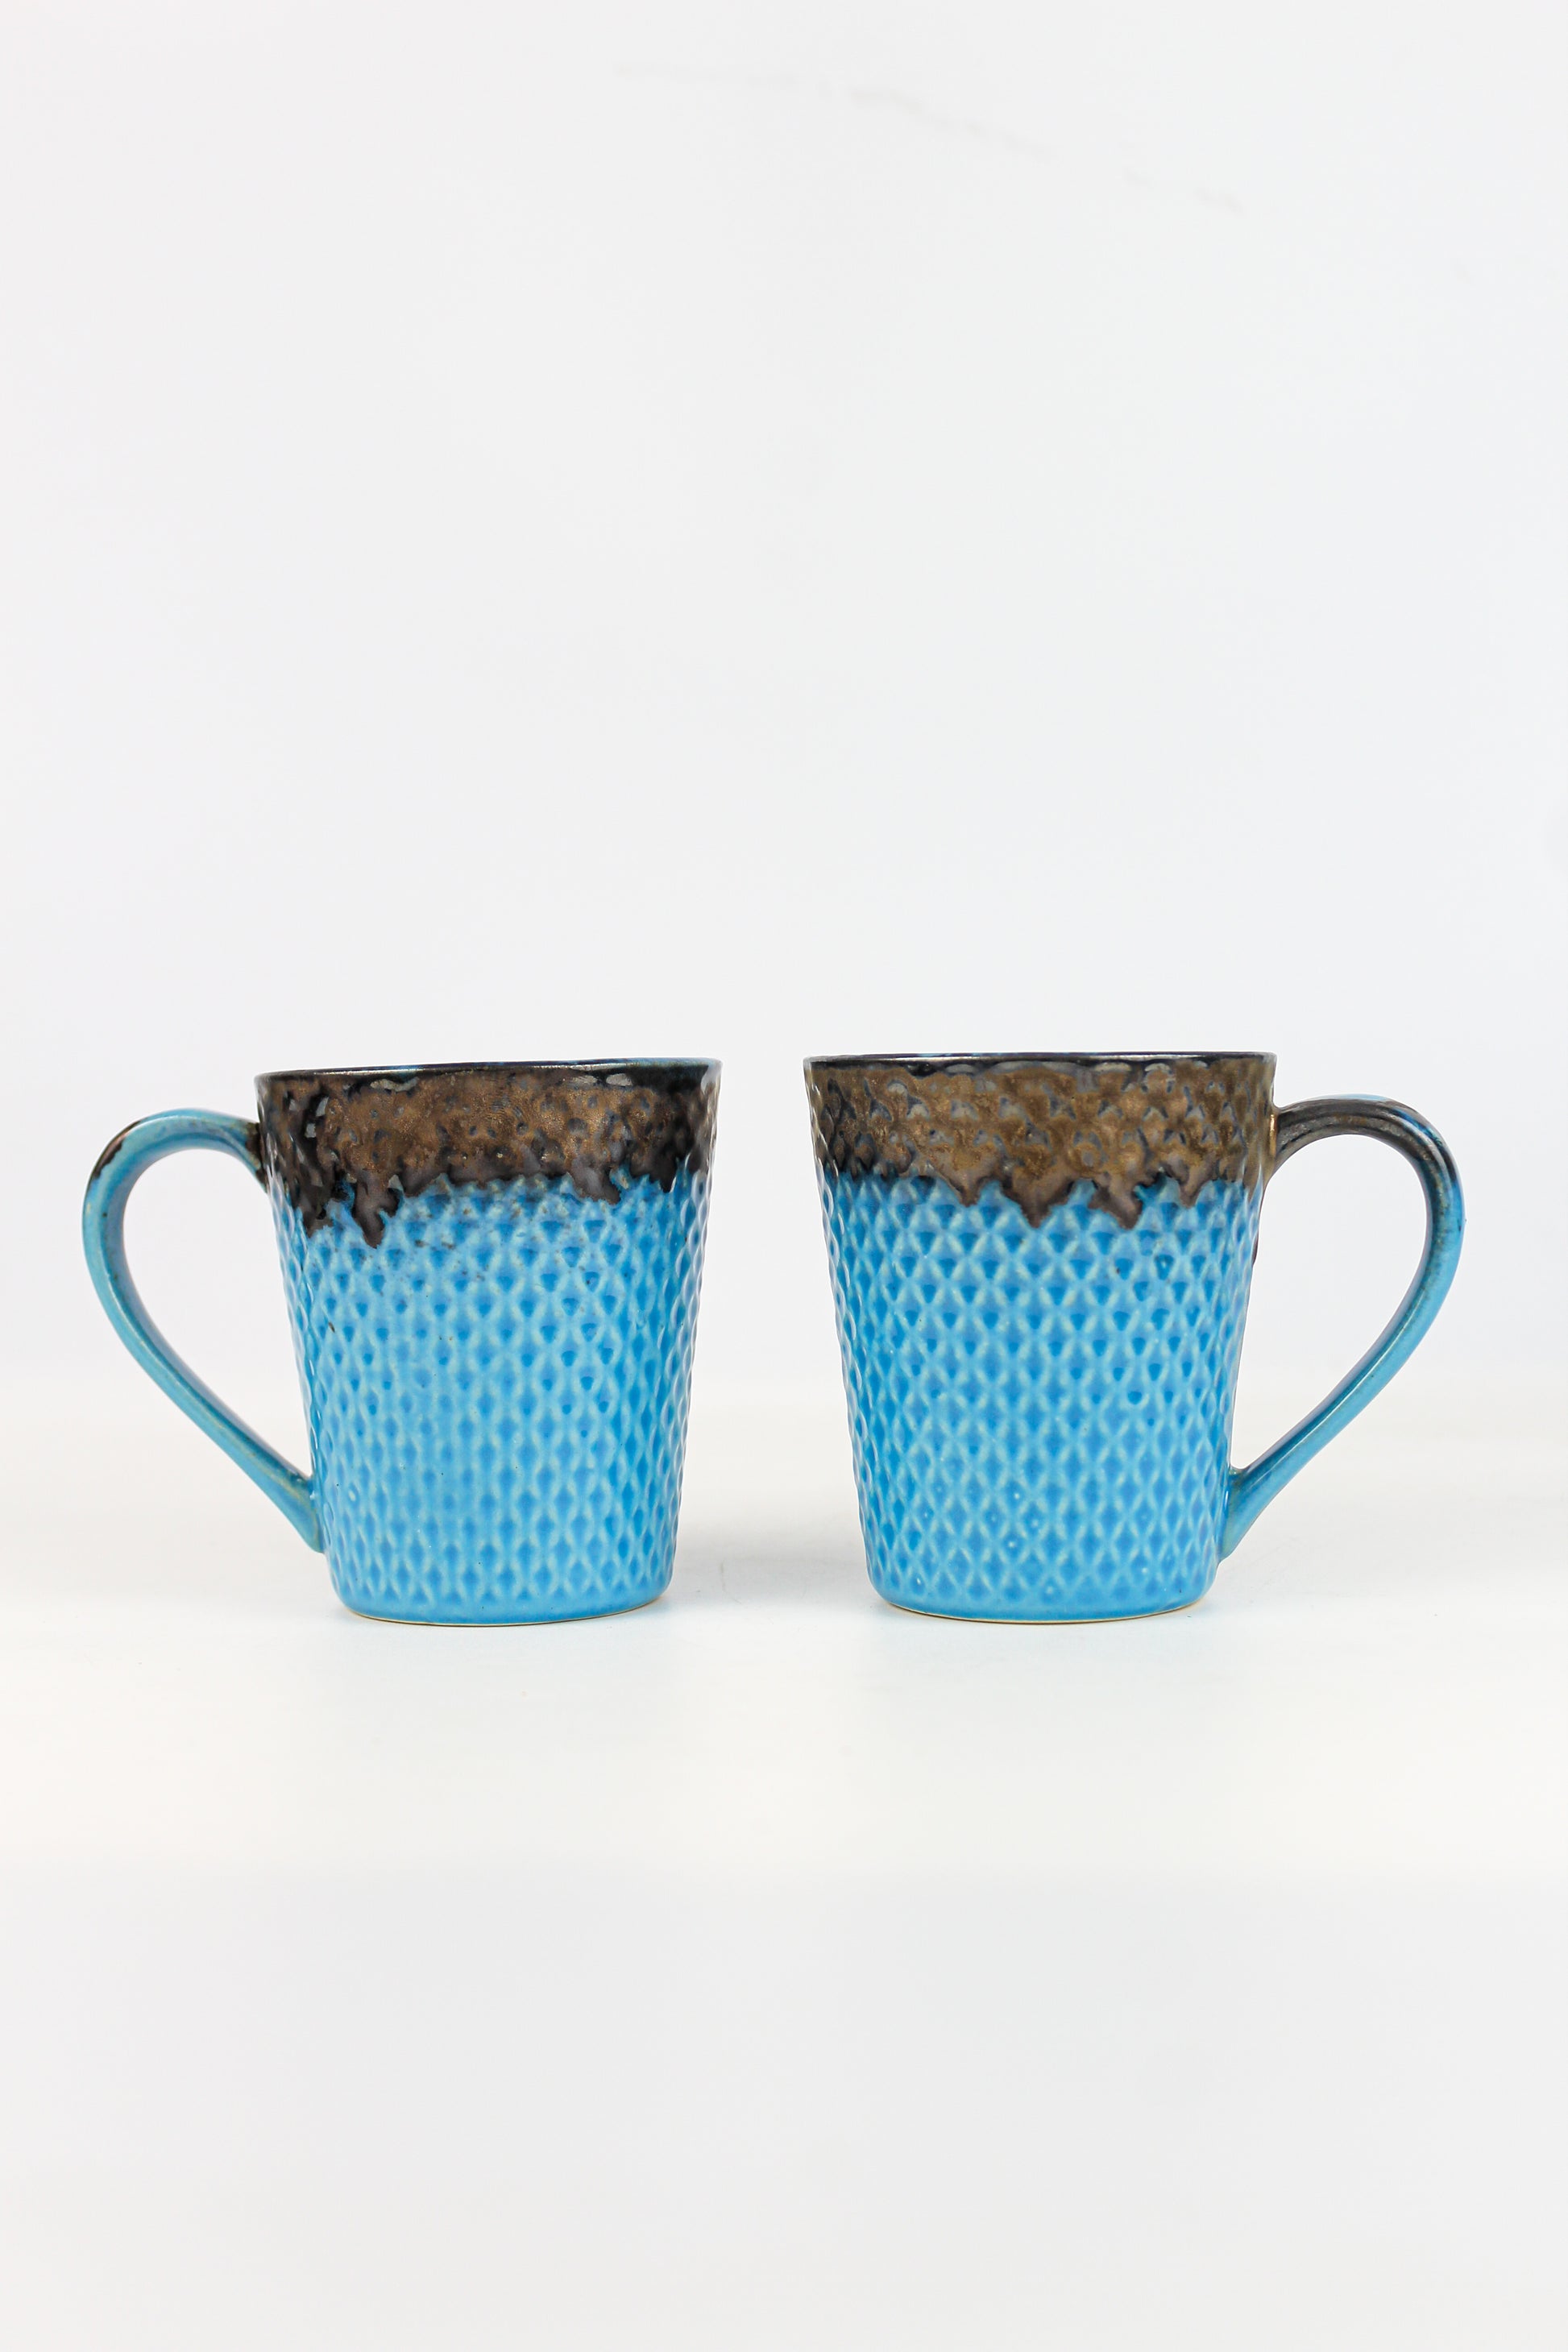 l'heure du cafe - Leaf Green Handcrafted Ceramic Coffee Mugs